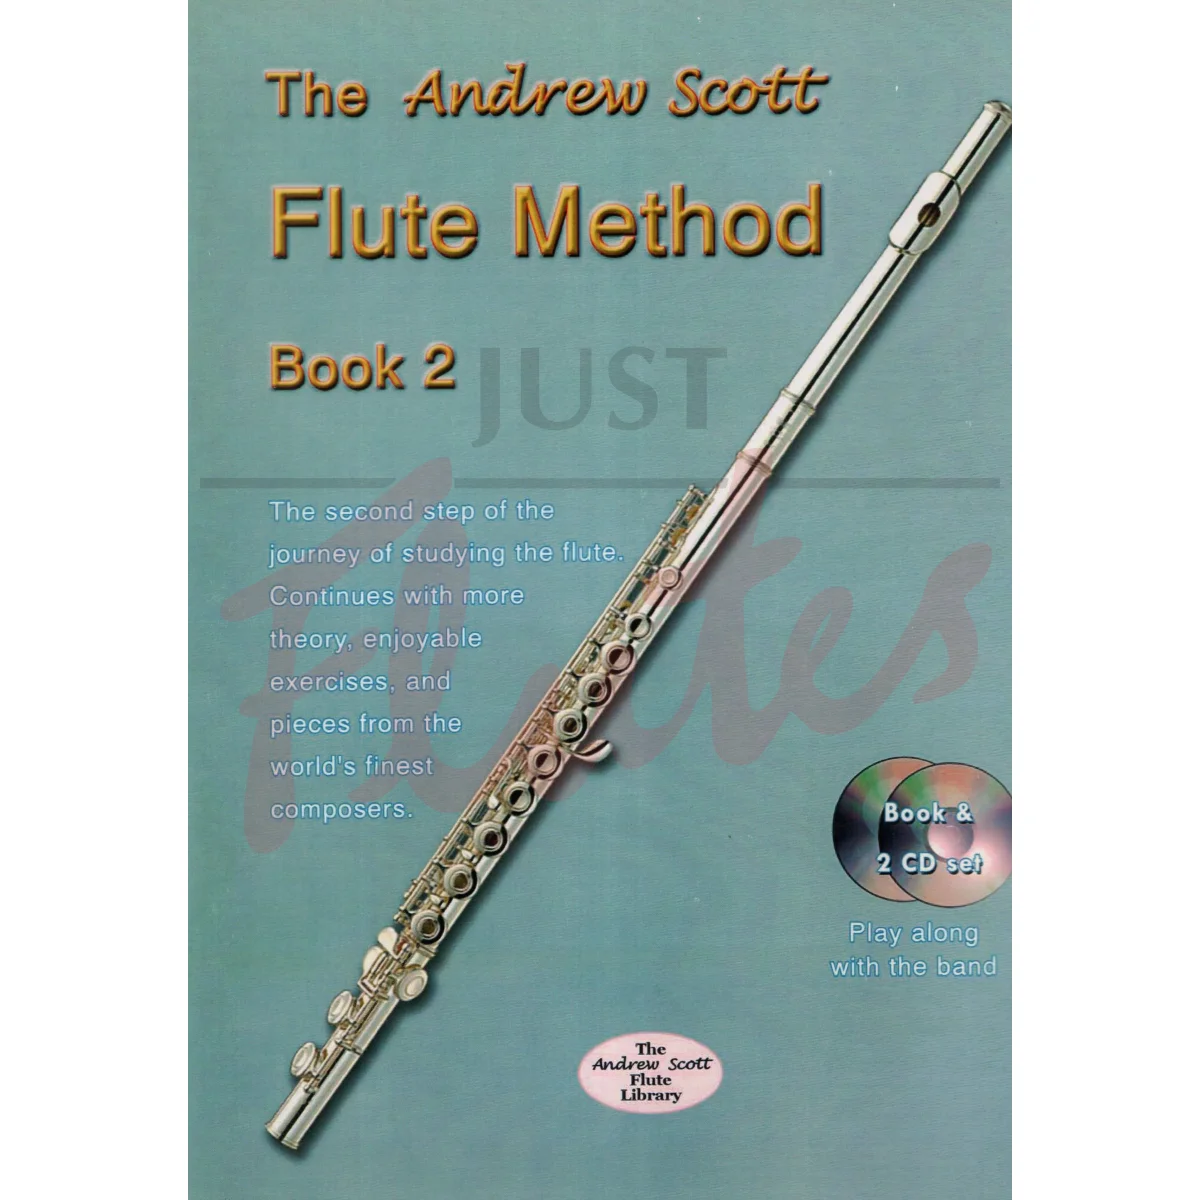 The Andrew Scott Flute Method, Book 2